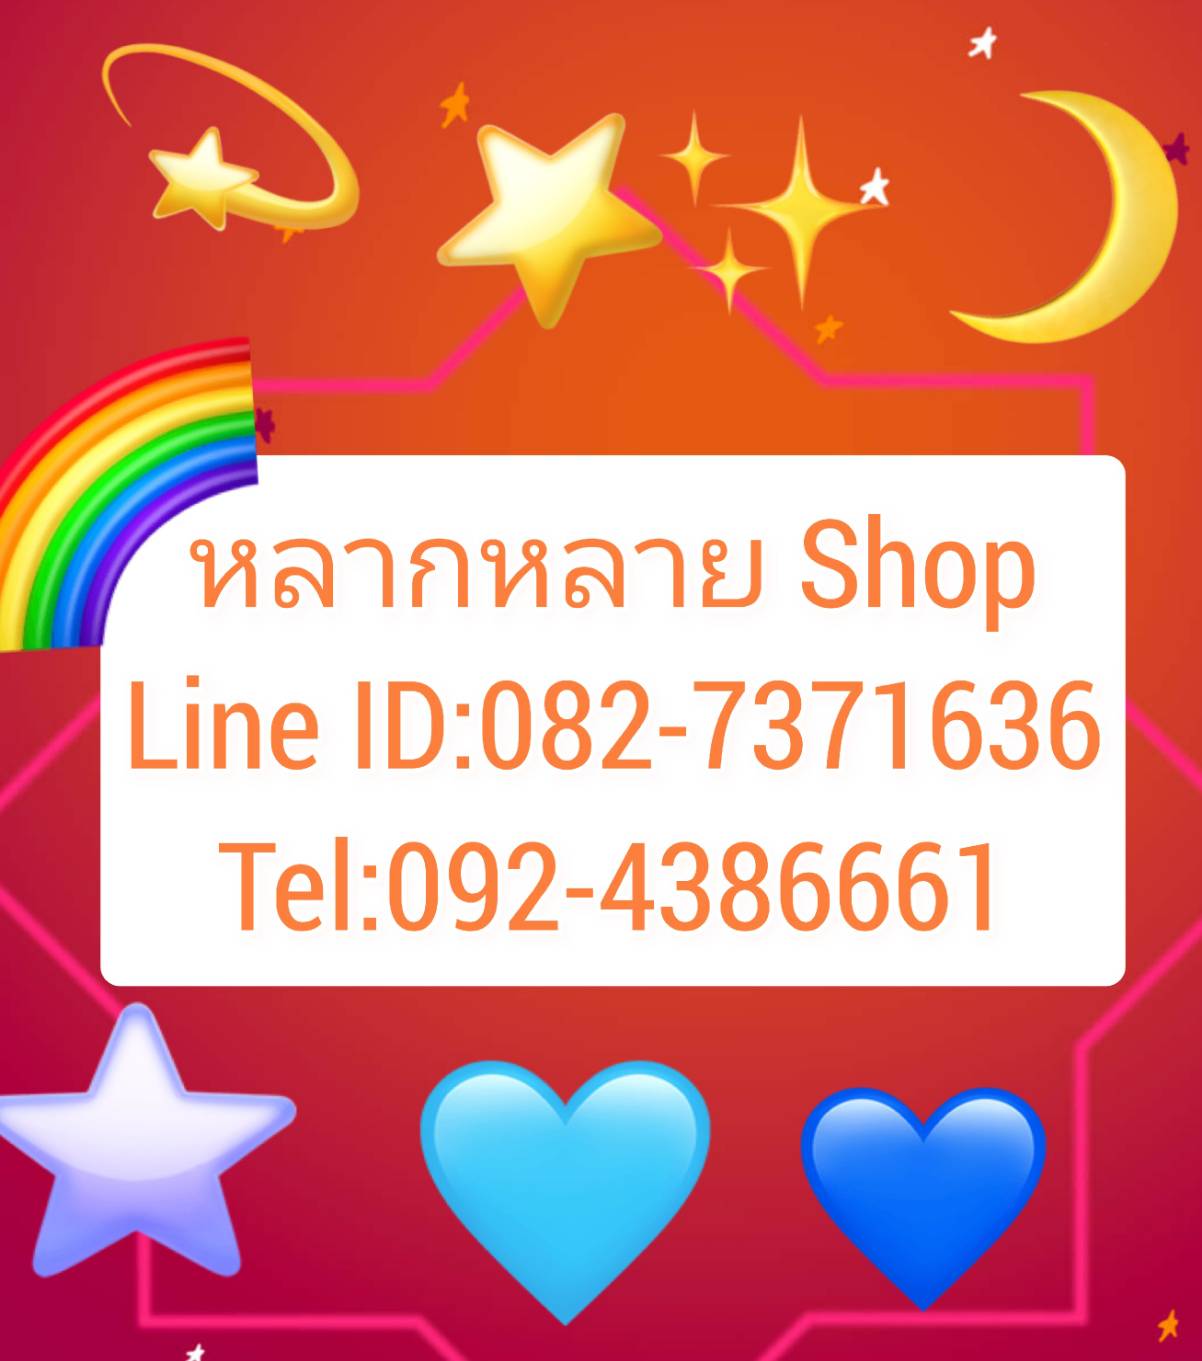   Line ID: 082-7371636
Tel 0924386661                                                                                                                                                                                                                            Sino ҹѵ